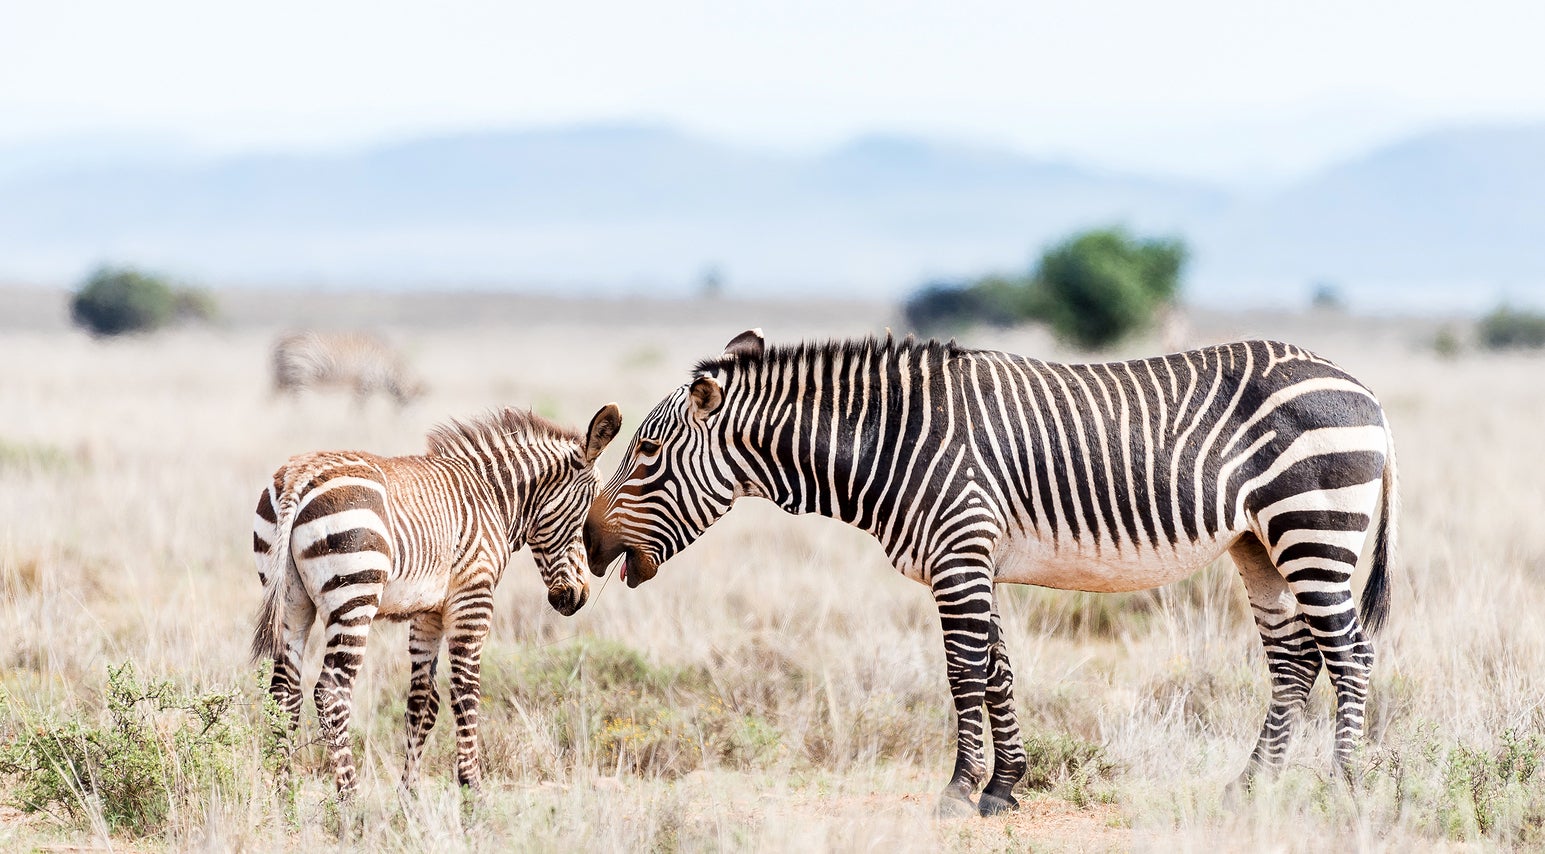 (Grobler du Preez/<a href='https://www.bigstockphoto.com/image-132772331/stock-photo-a-mountain-zebra-mare-equus-zebra-zebra-with-open-mouth-as-if-talking-with-foal'>Big Stock Photo</a>)